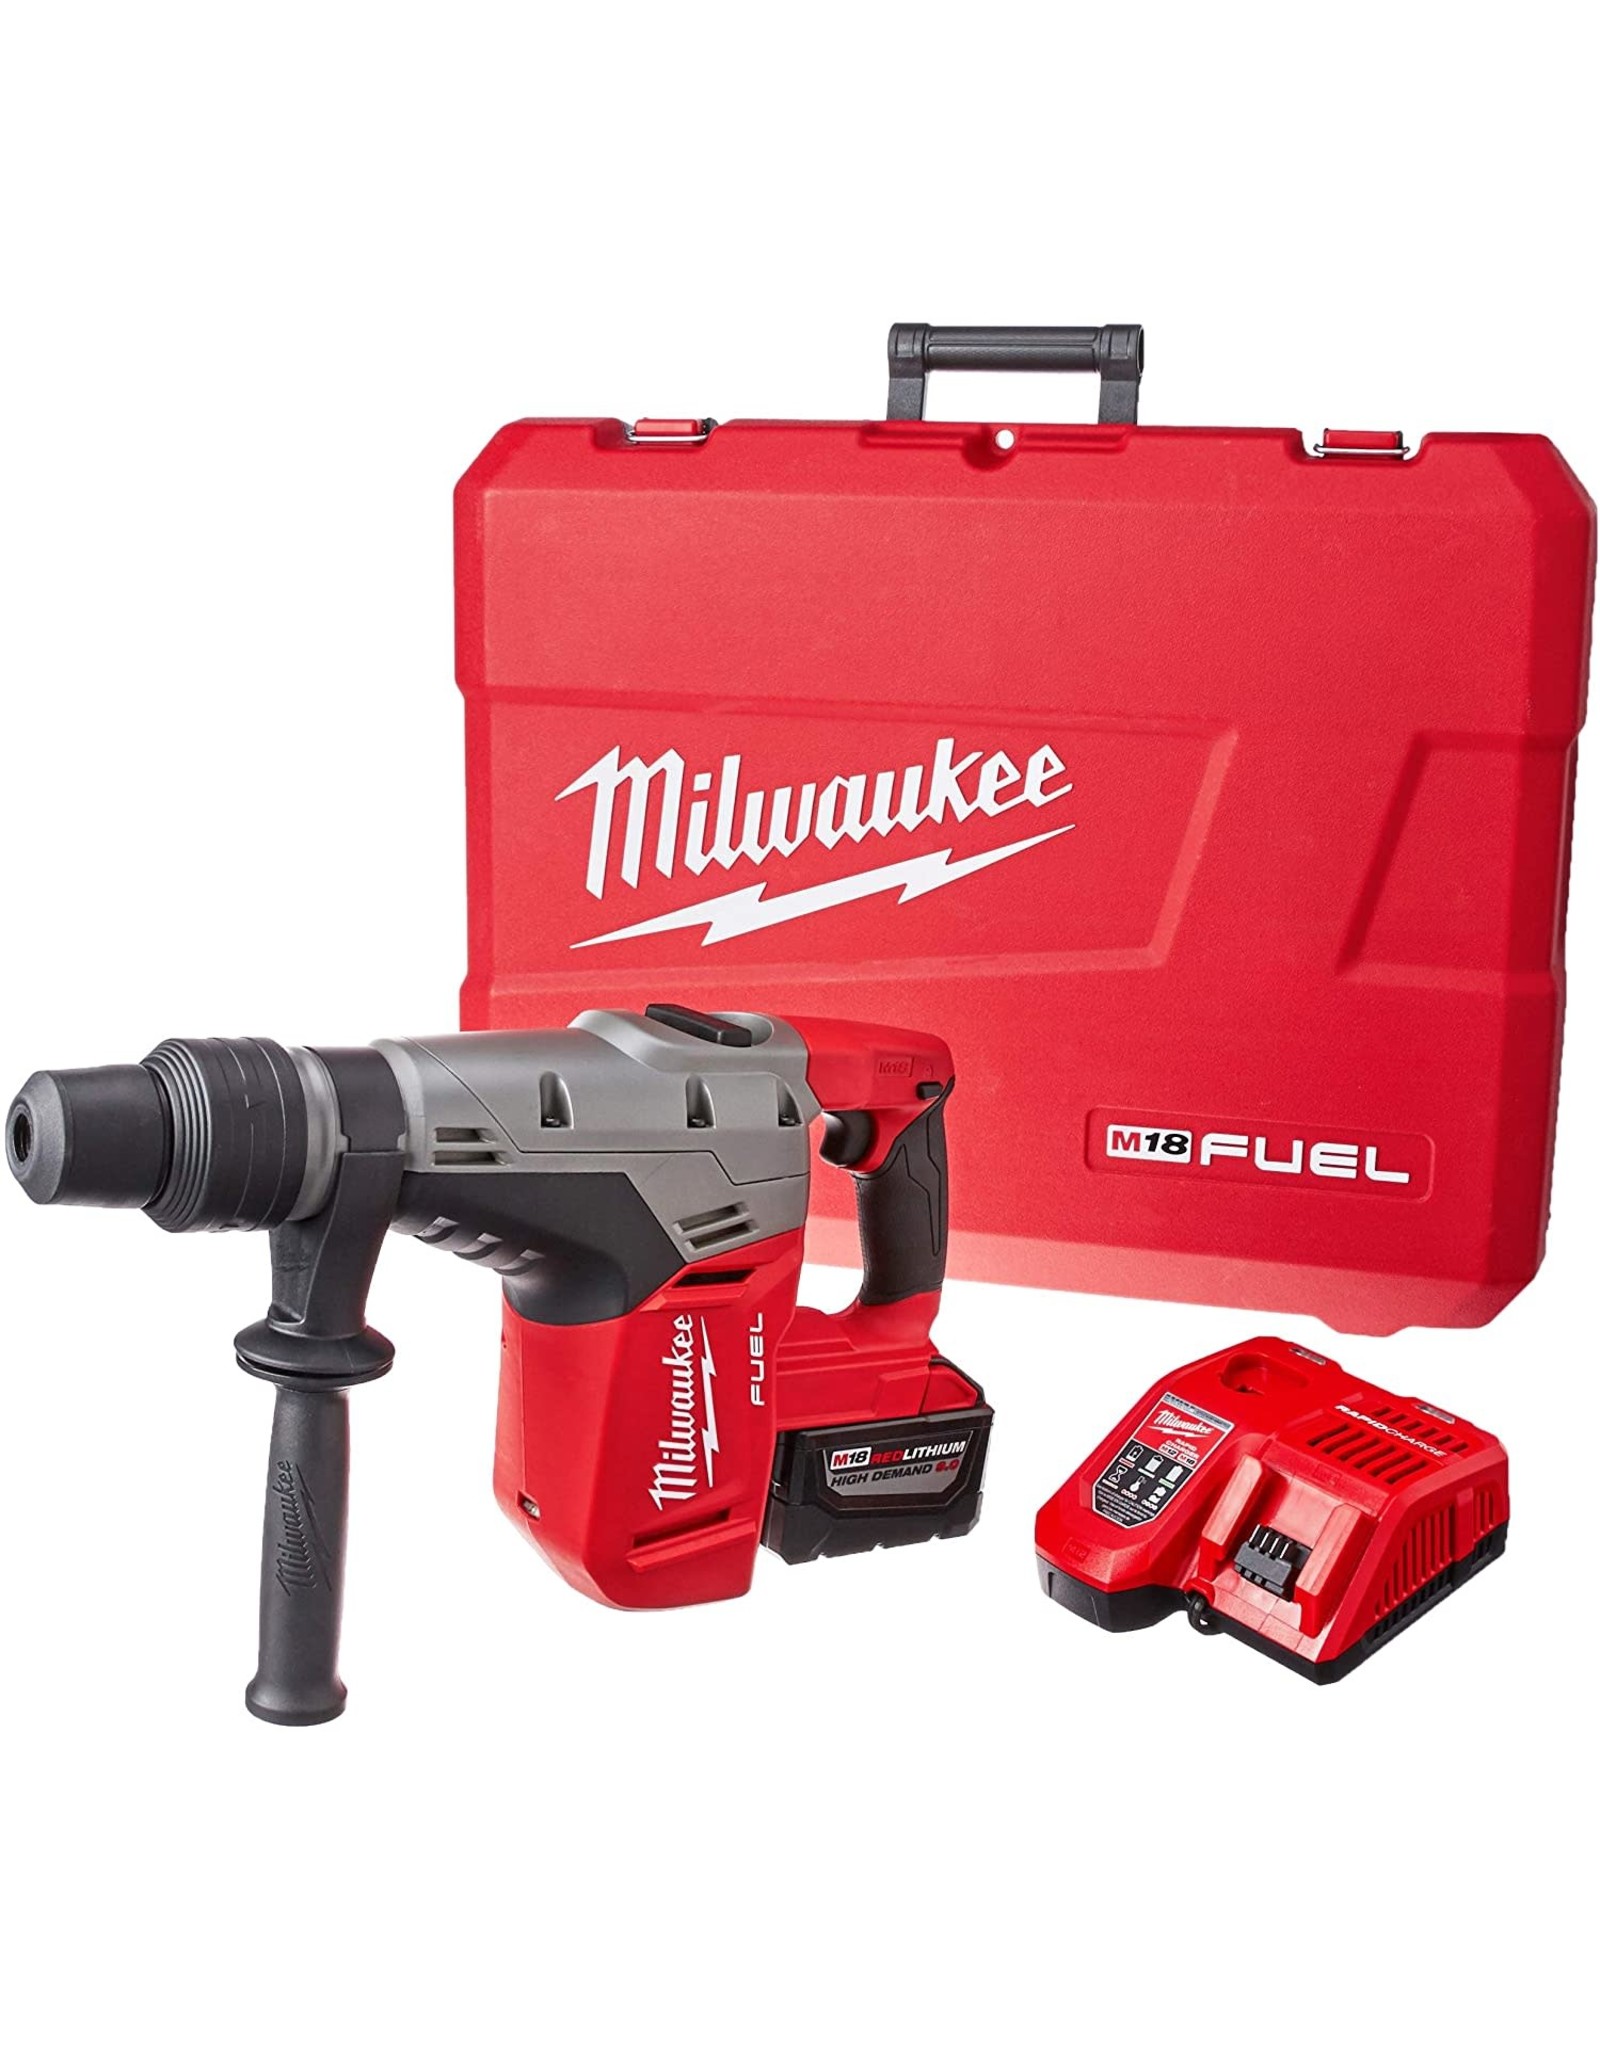 Milwaukee M18 FUEL™ 1-9/16" SDS Max Hammer Drill Kit